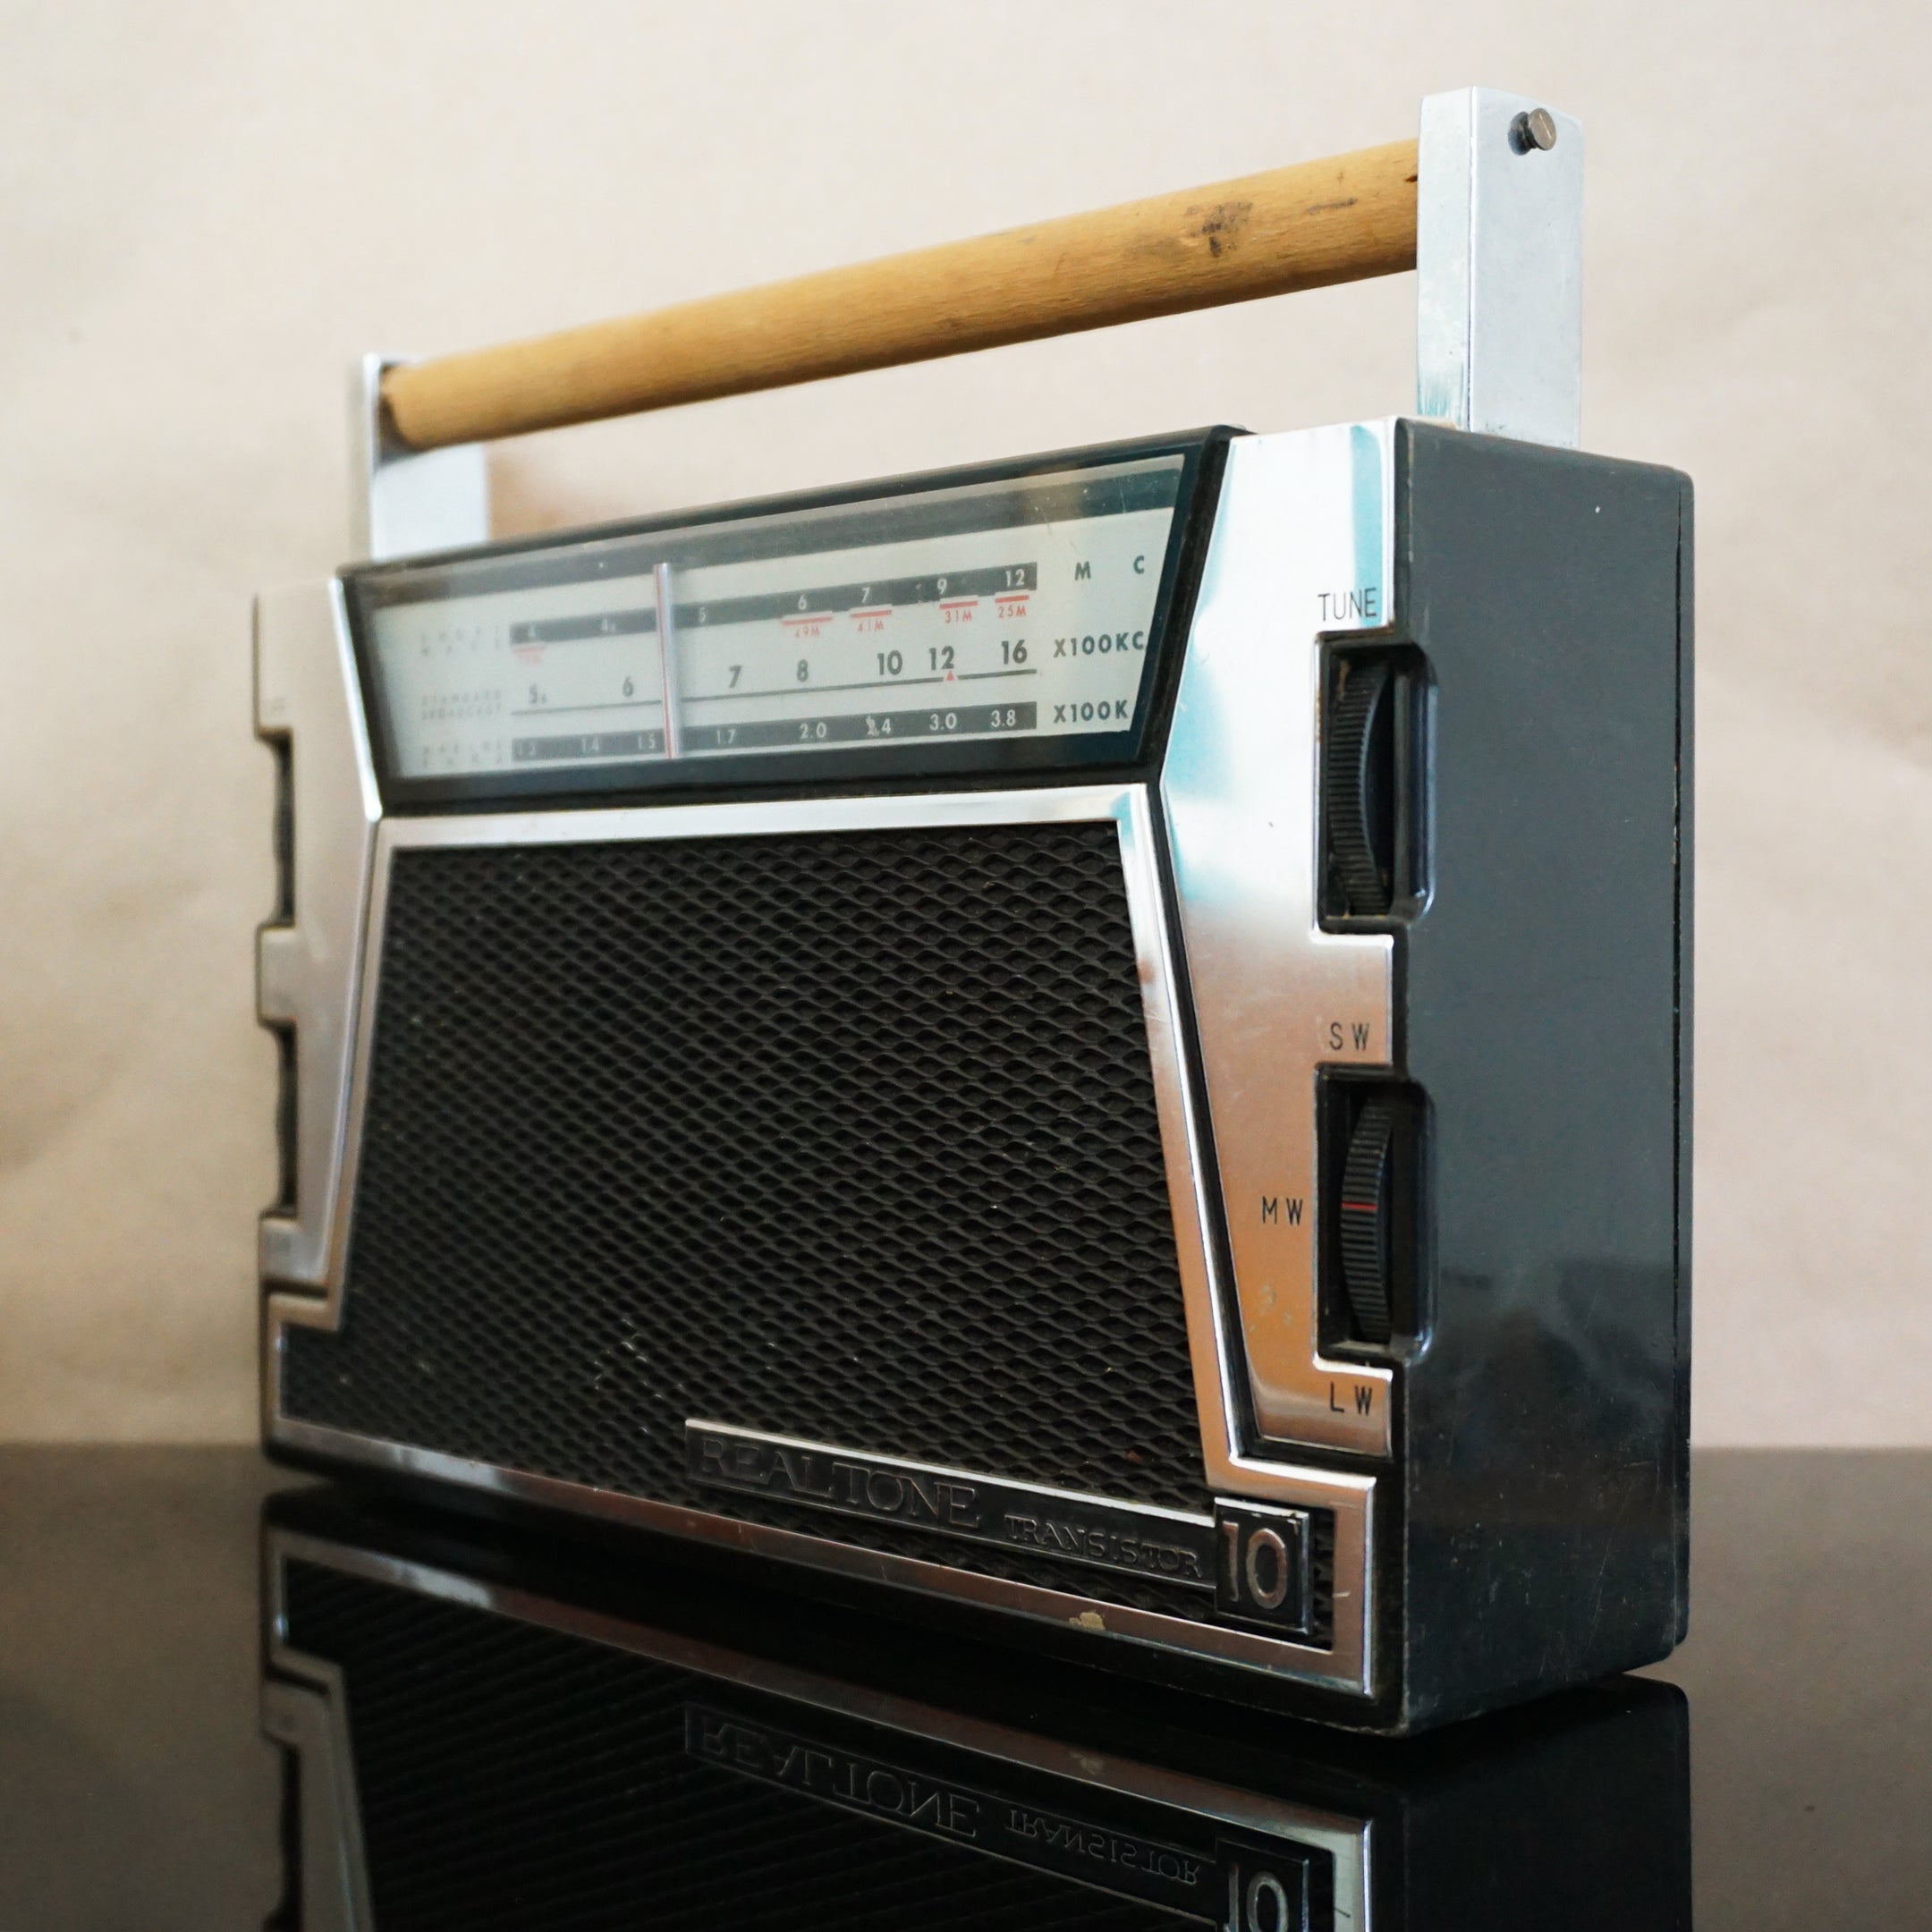 Vintage REALTONE Transistor 10 Radio w/ Bluetooth Technology. Made in Japan.